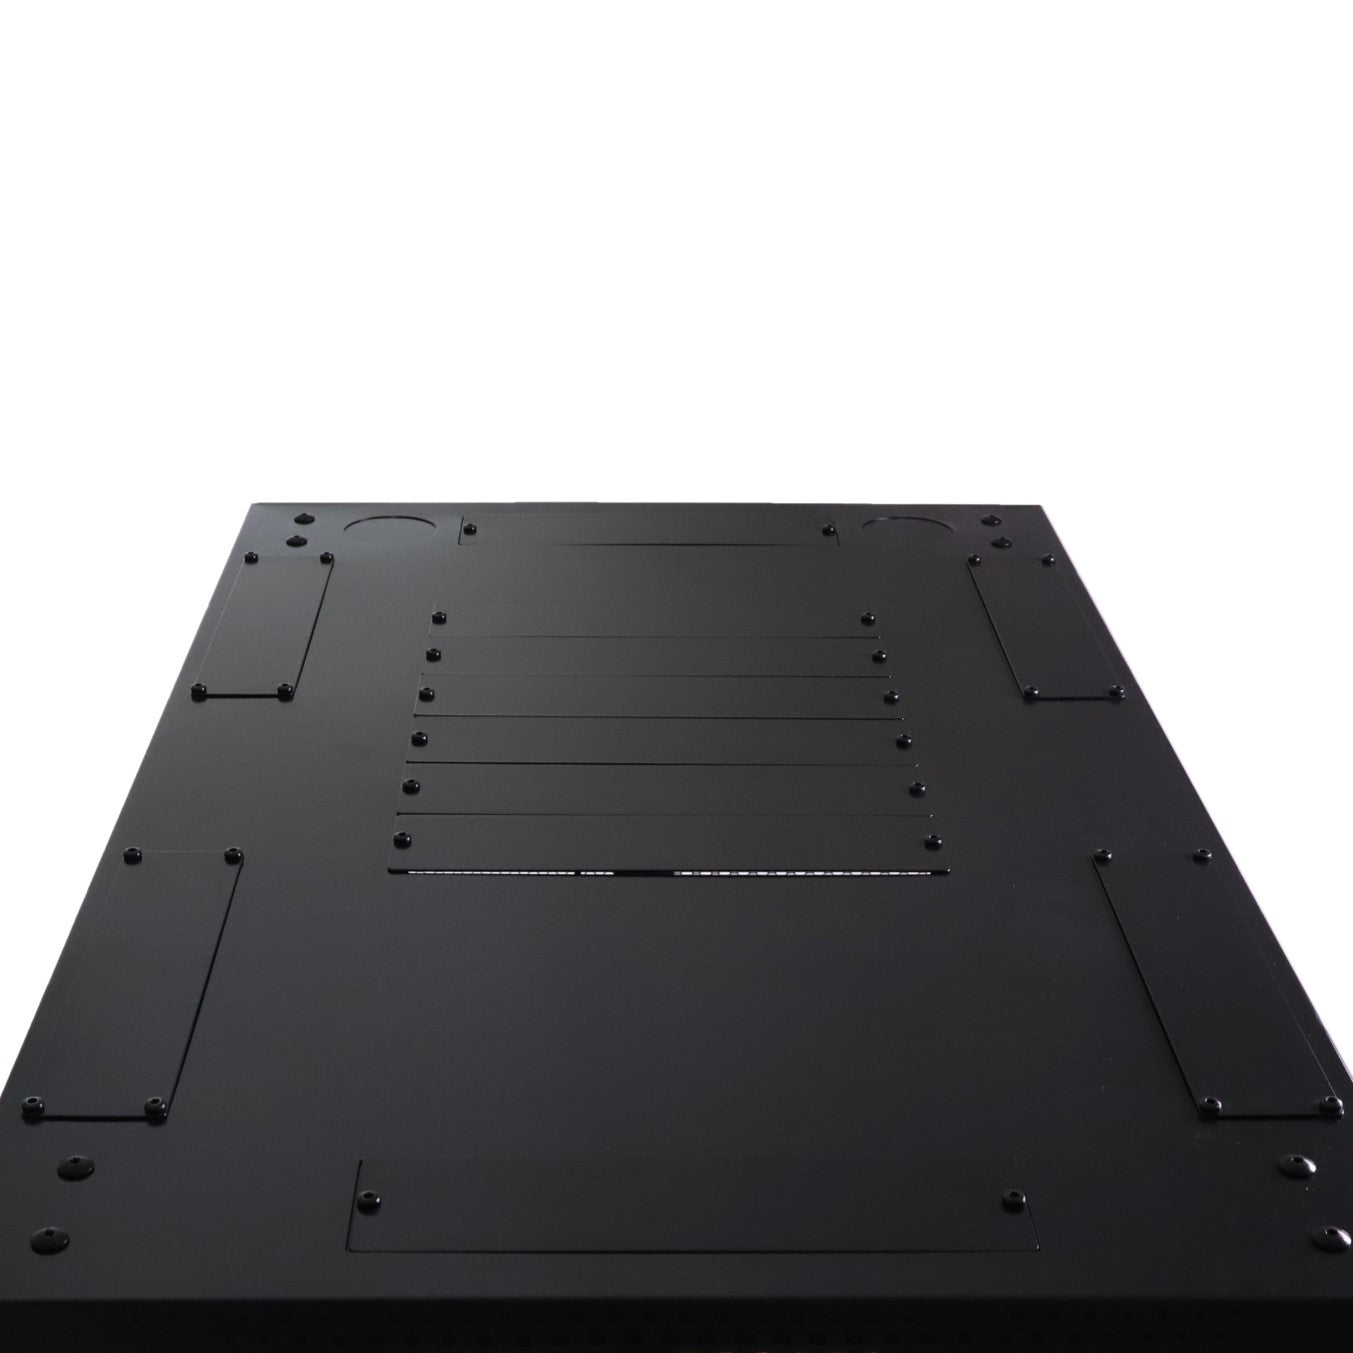 Aeons G-Seires 42U Professional Server Rack Enclosure Cabinet Kit, Mid-Depth, Secure Glass Door, Cable Management